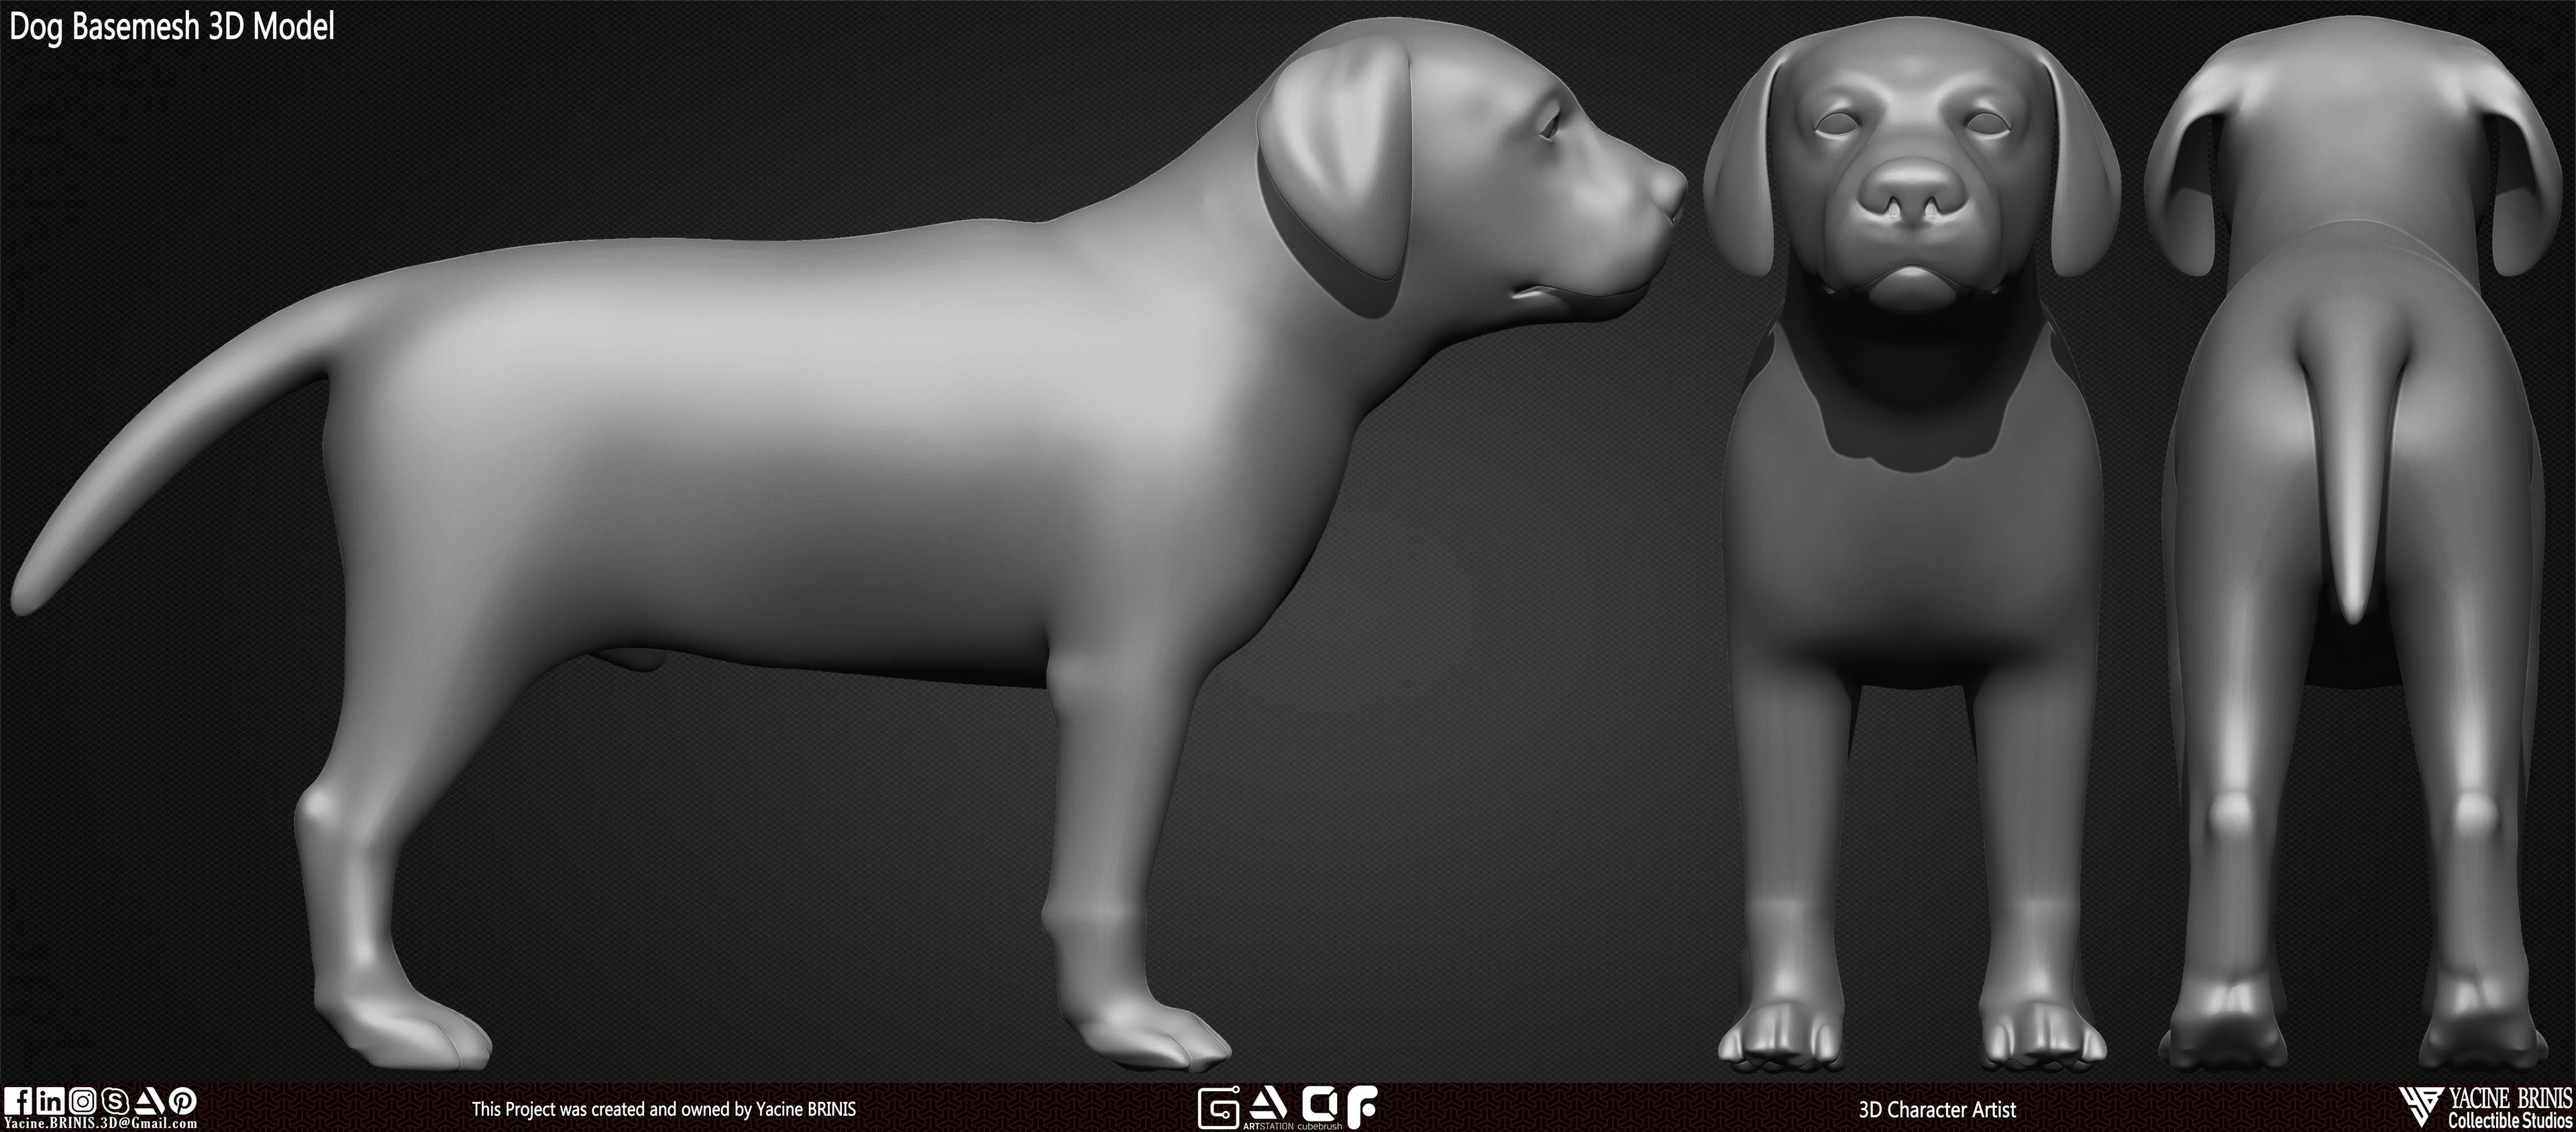 Dog Basemesh 3D Model Vol 01 sculpted By Yacine BRINIS Set 002